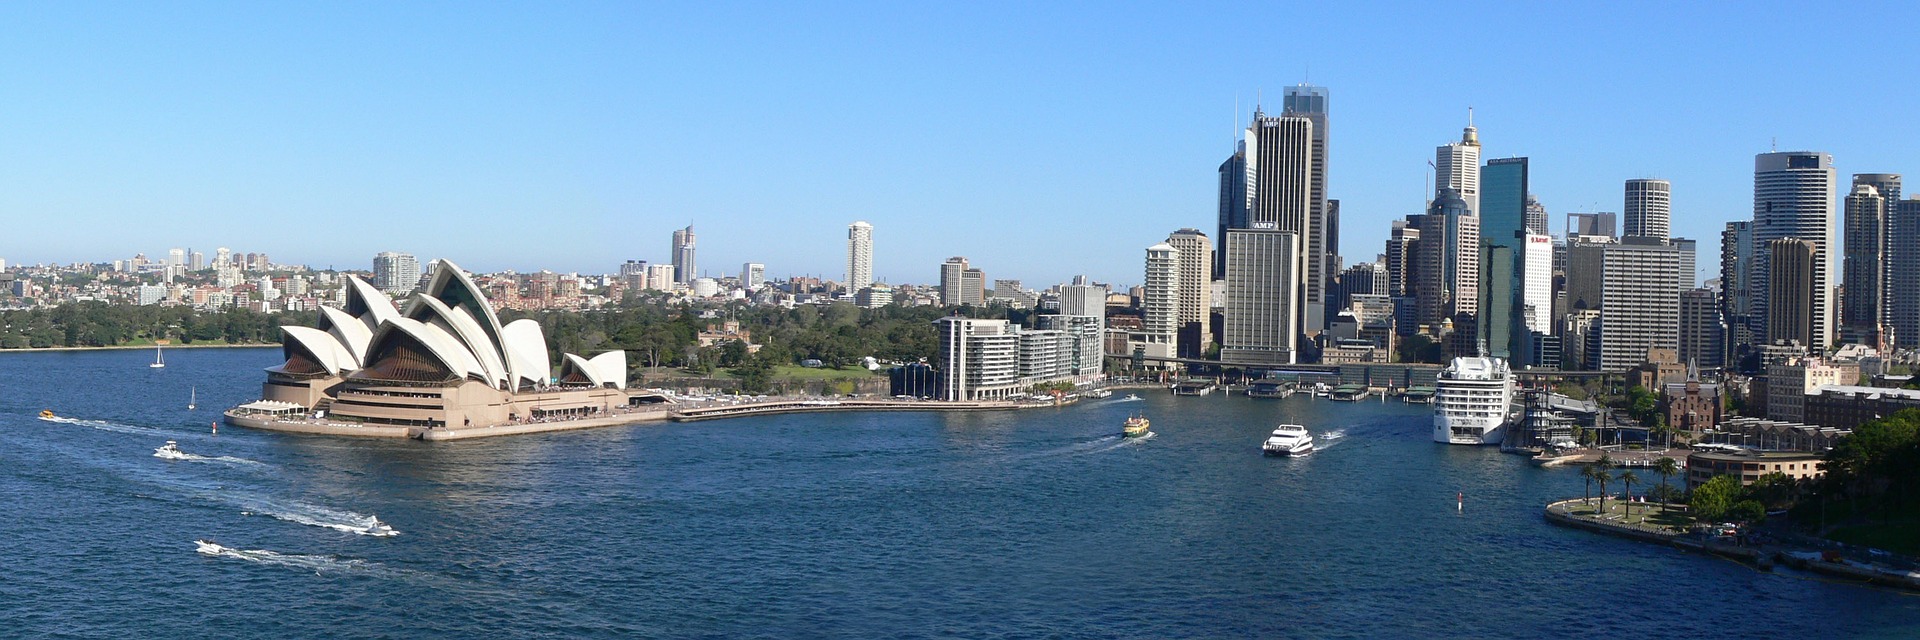 Sydney, Australia Travel Guide | Panoramic View of Sydney Harbor, including Sydney Opera House